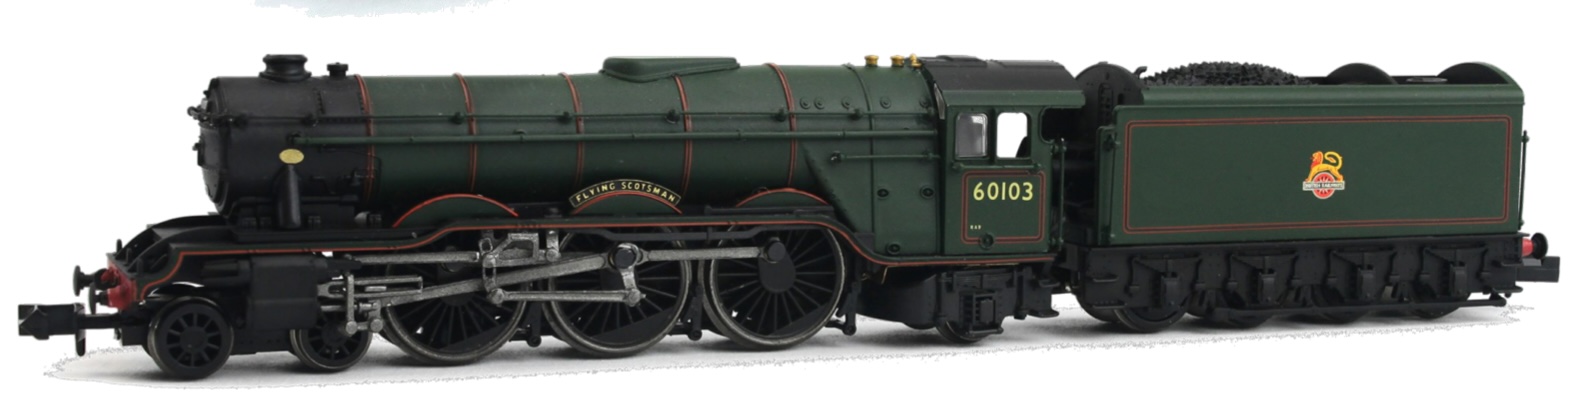 N Scale - Dapol - 2S-011-008 - Locomotive, Steam, 4-6-2 , A3 Pacific - British Rail - 60103